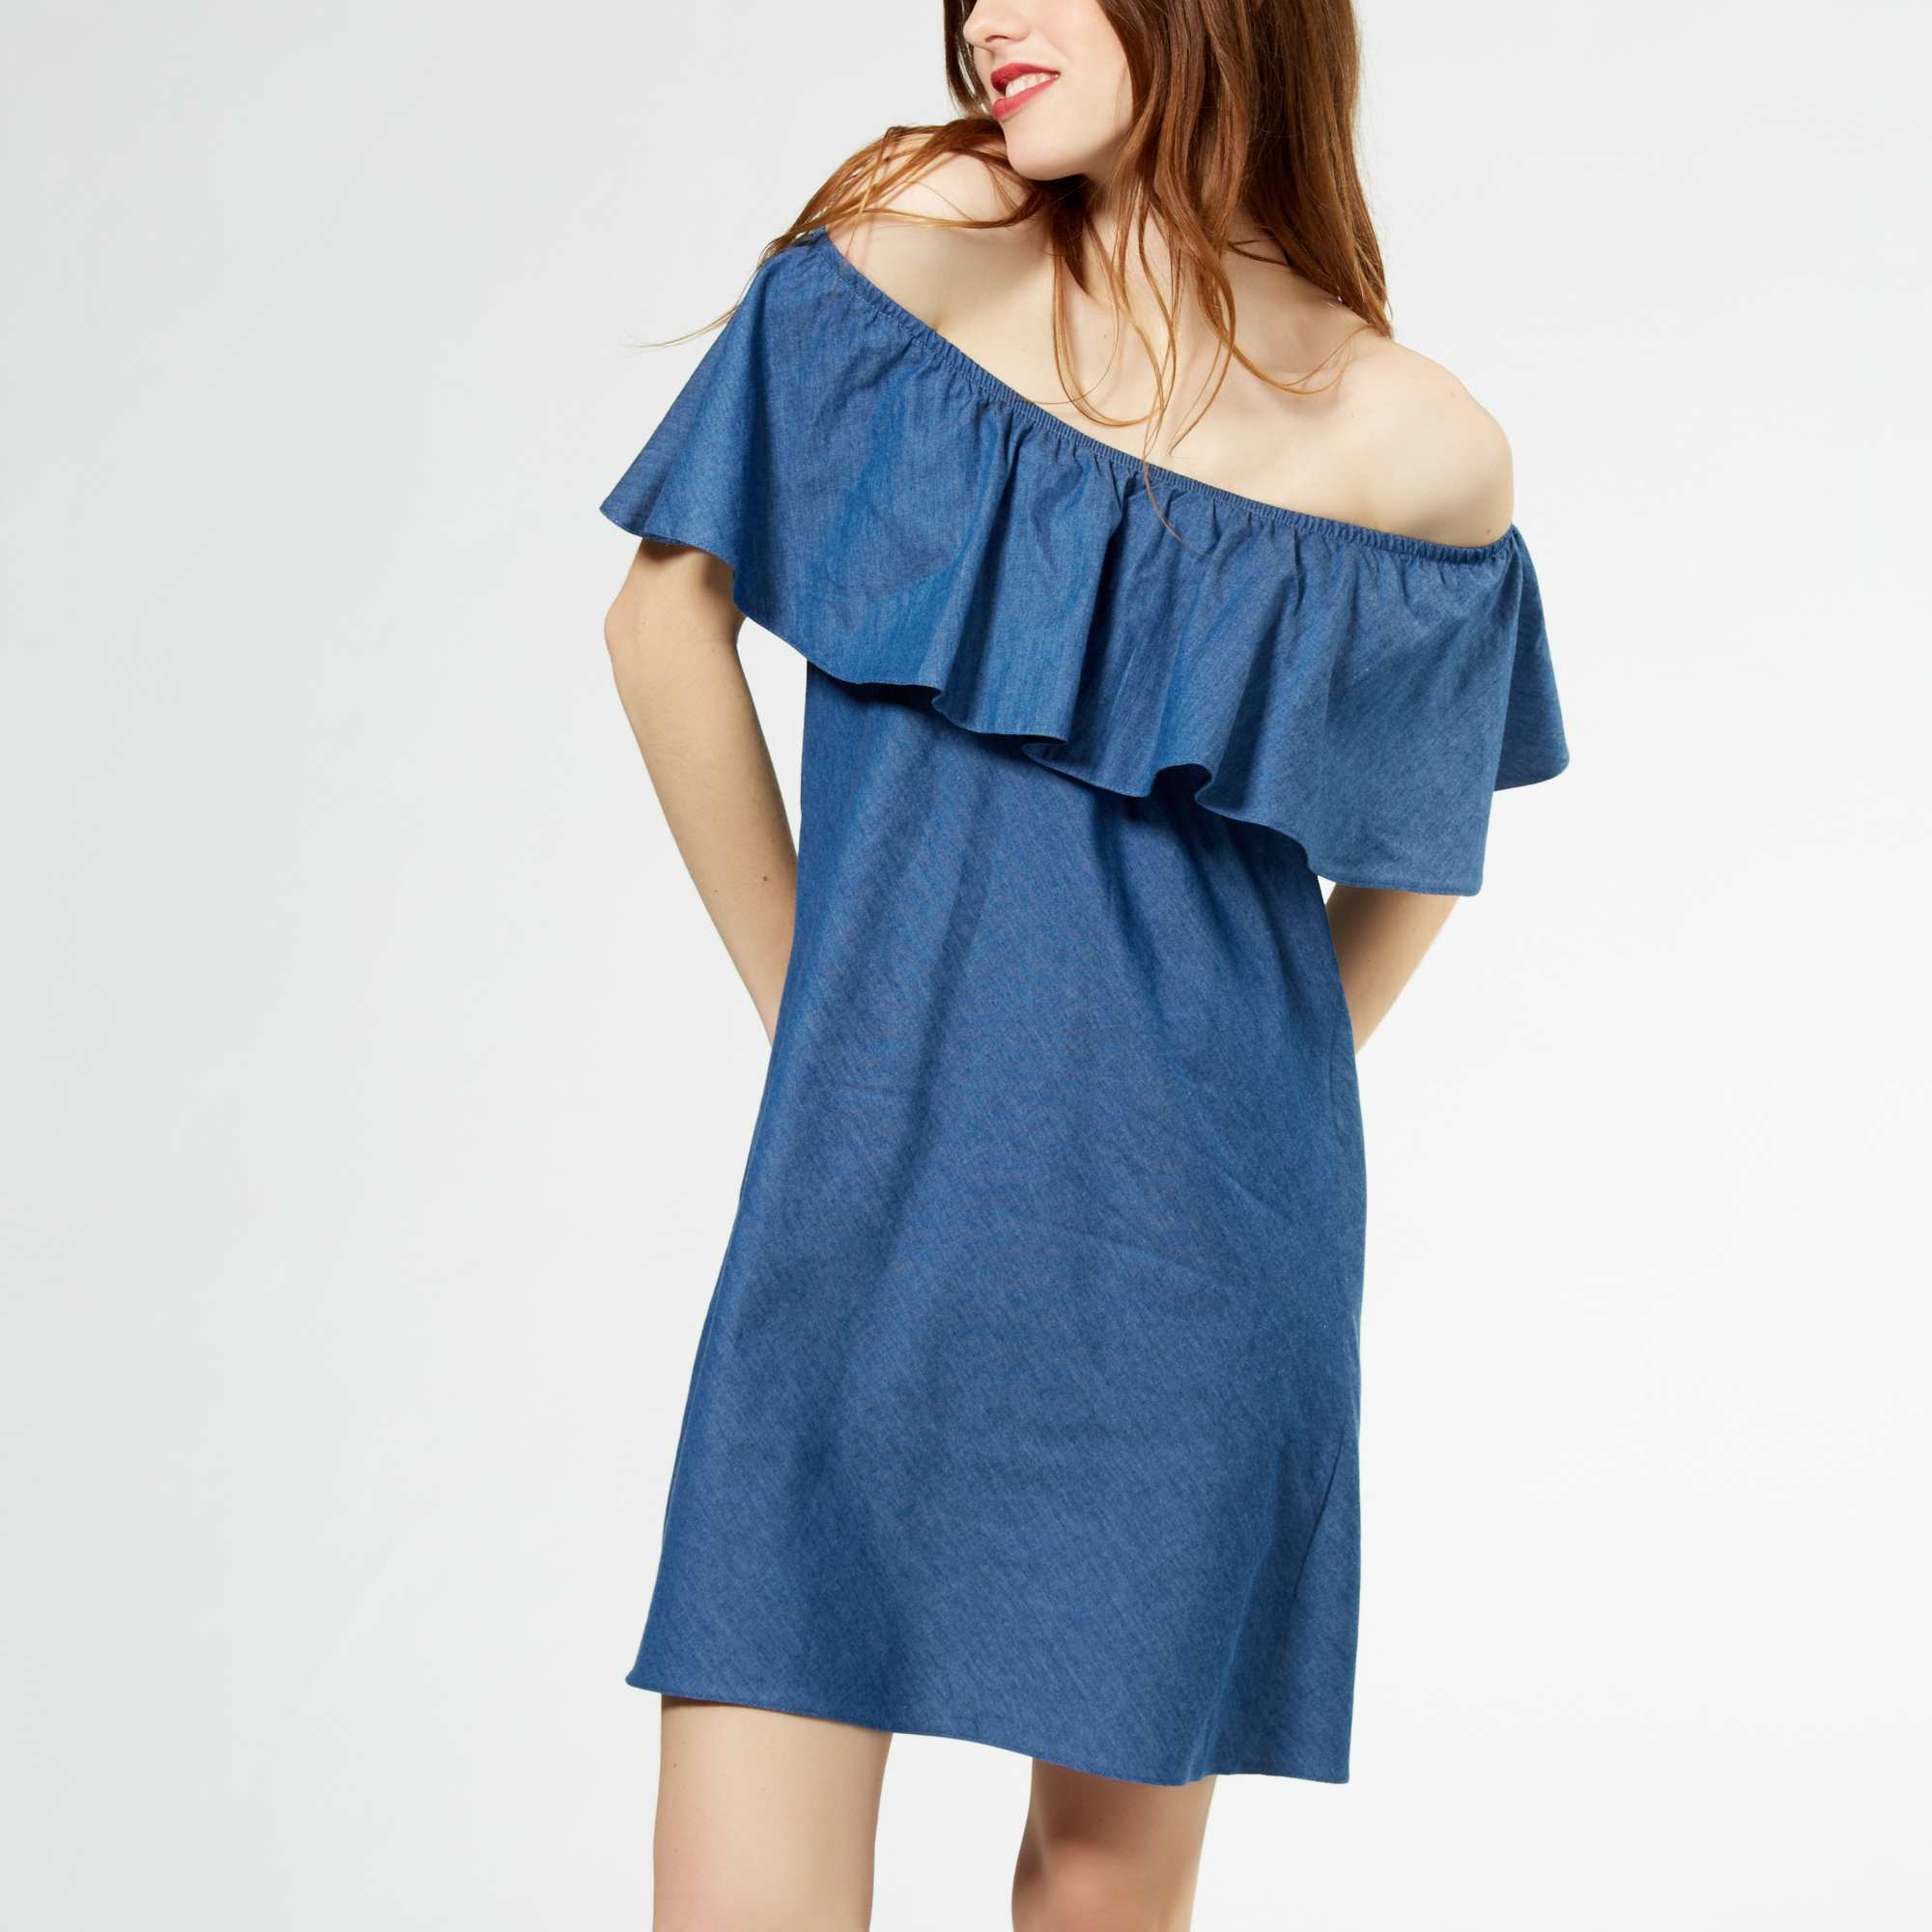 robe-en-jean-epaules-denudees-bleu-femme-vb422_1_zc1